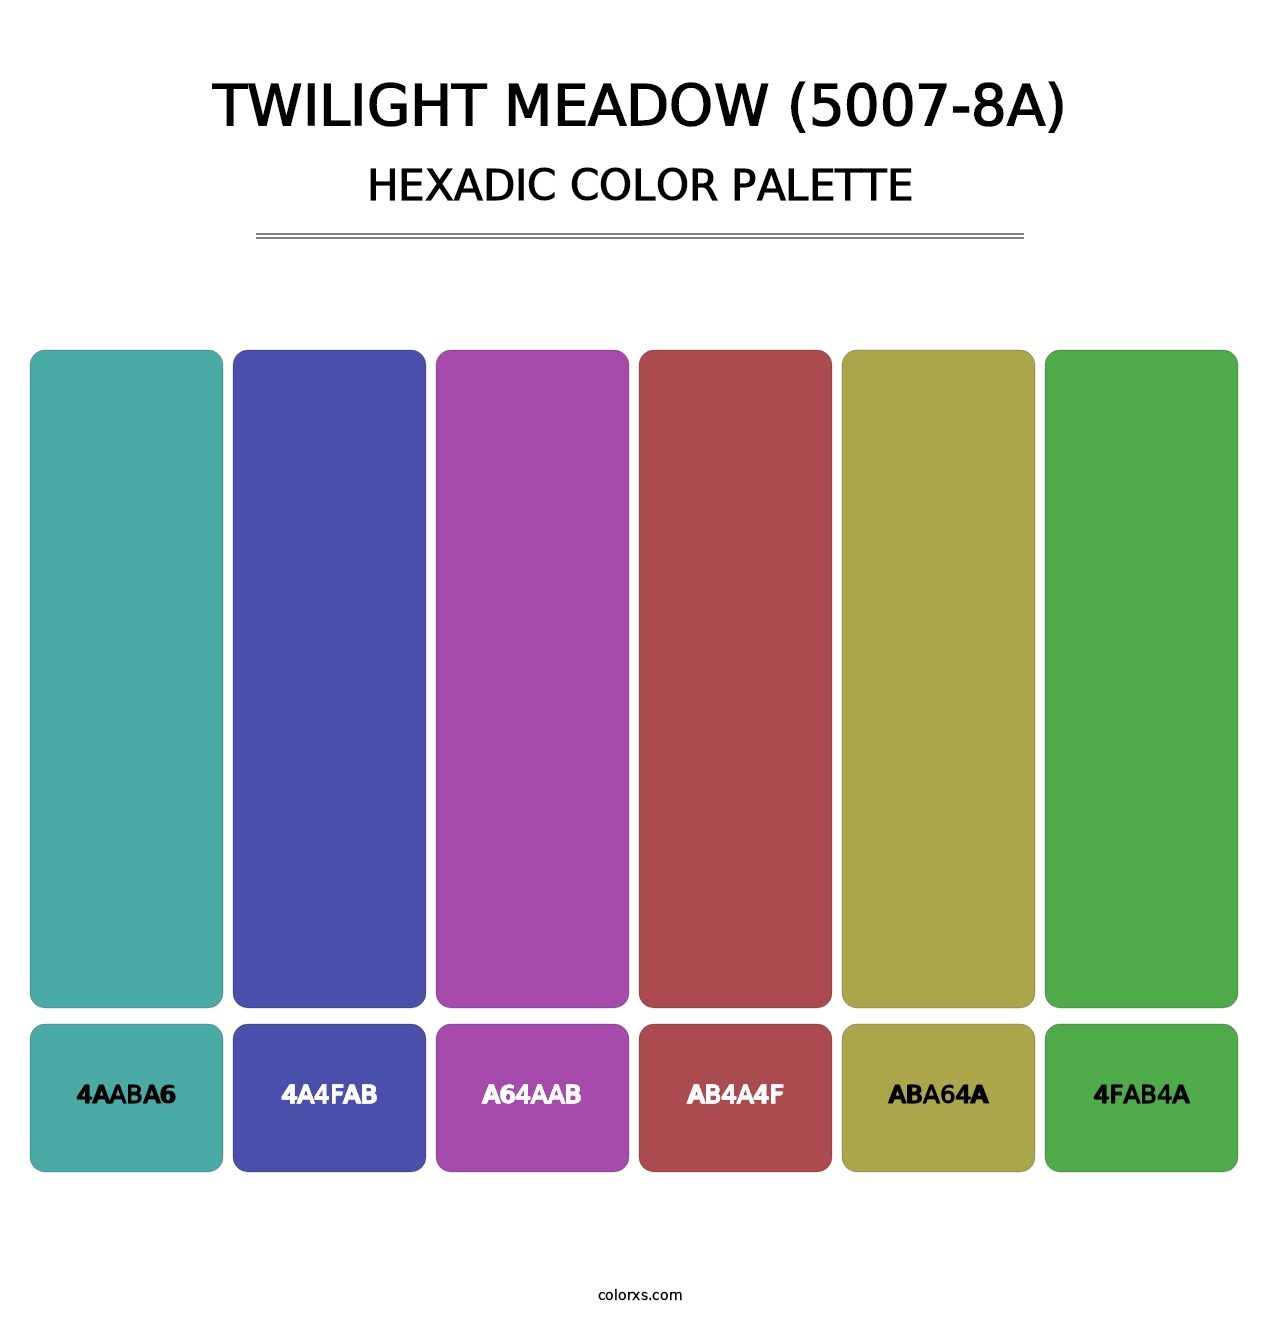 Twilight Meadow (5007-8A) - Hexadic Color Palette